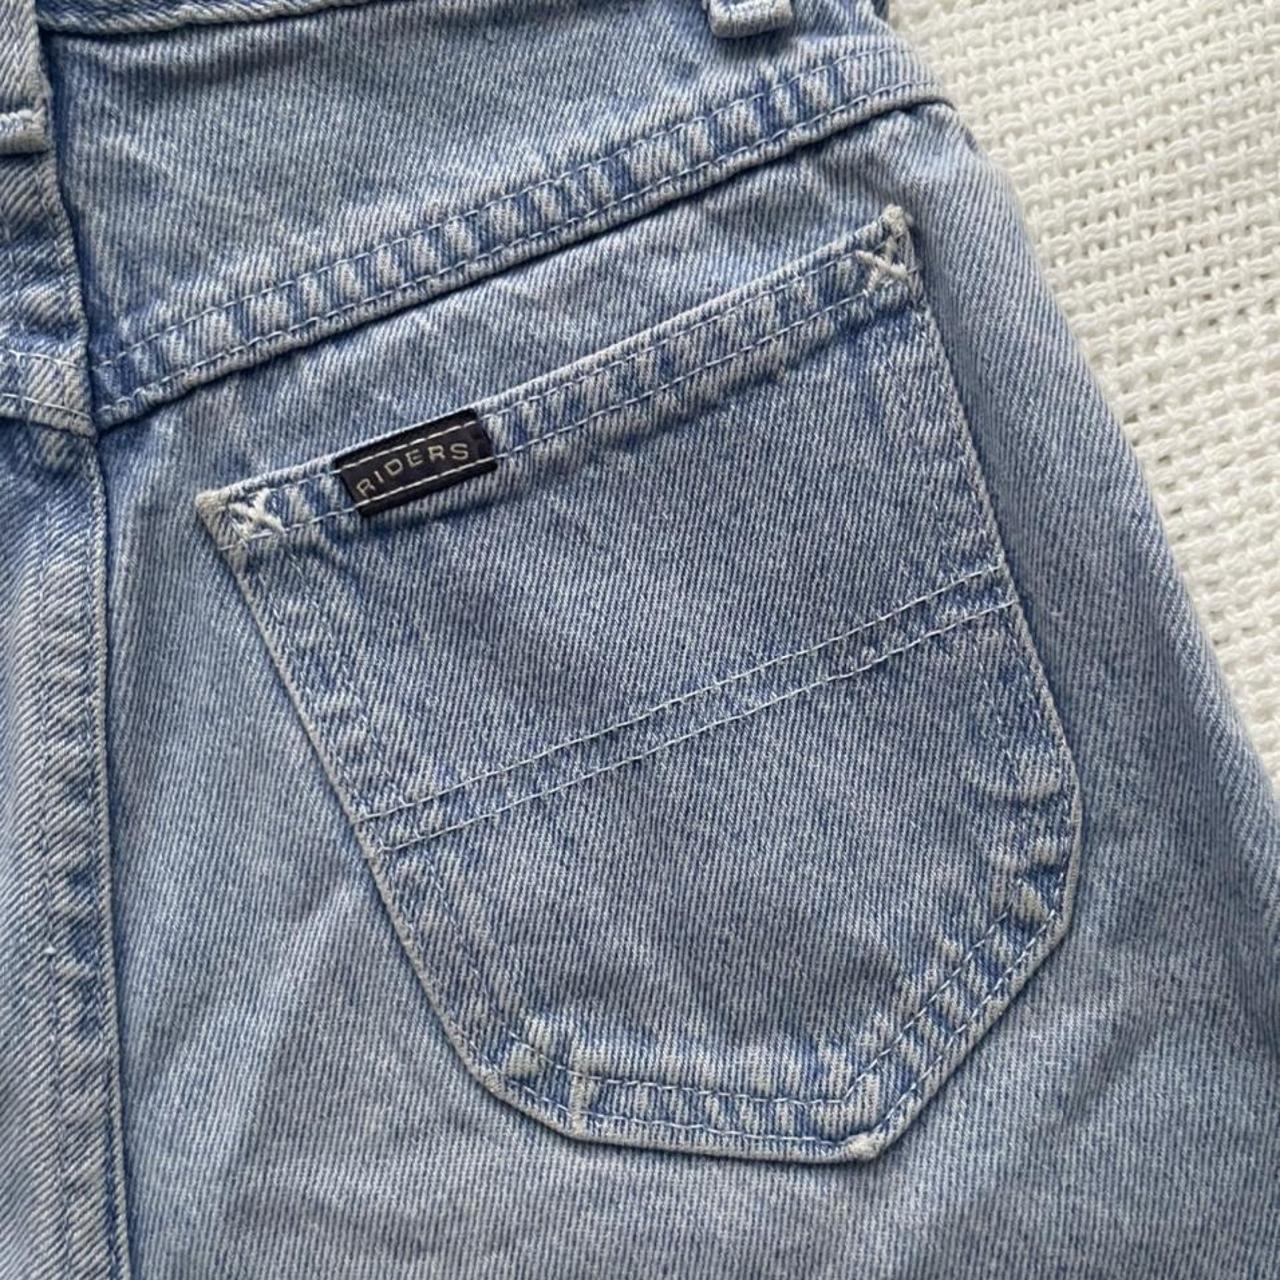 Cute lil vintage denim shorts 24 inch waist Riders... - Depop